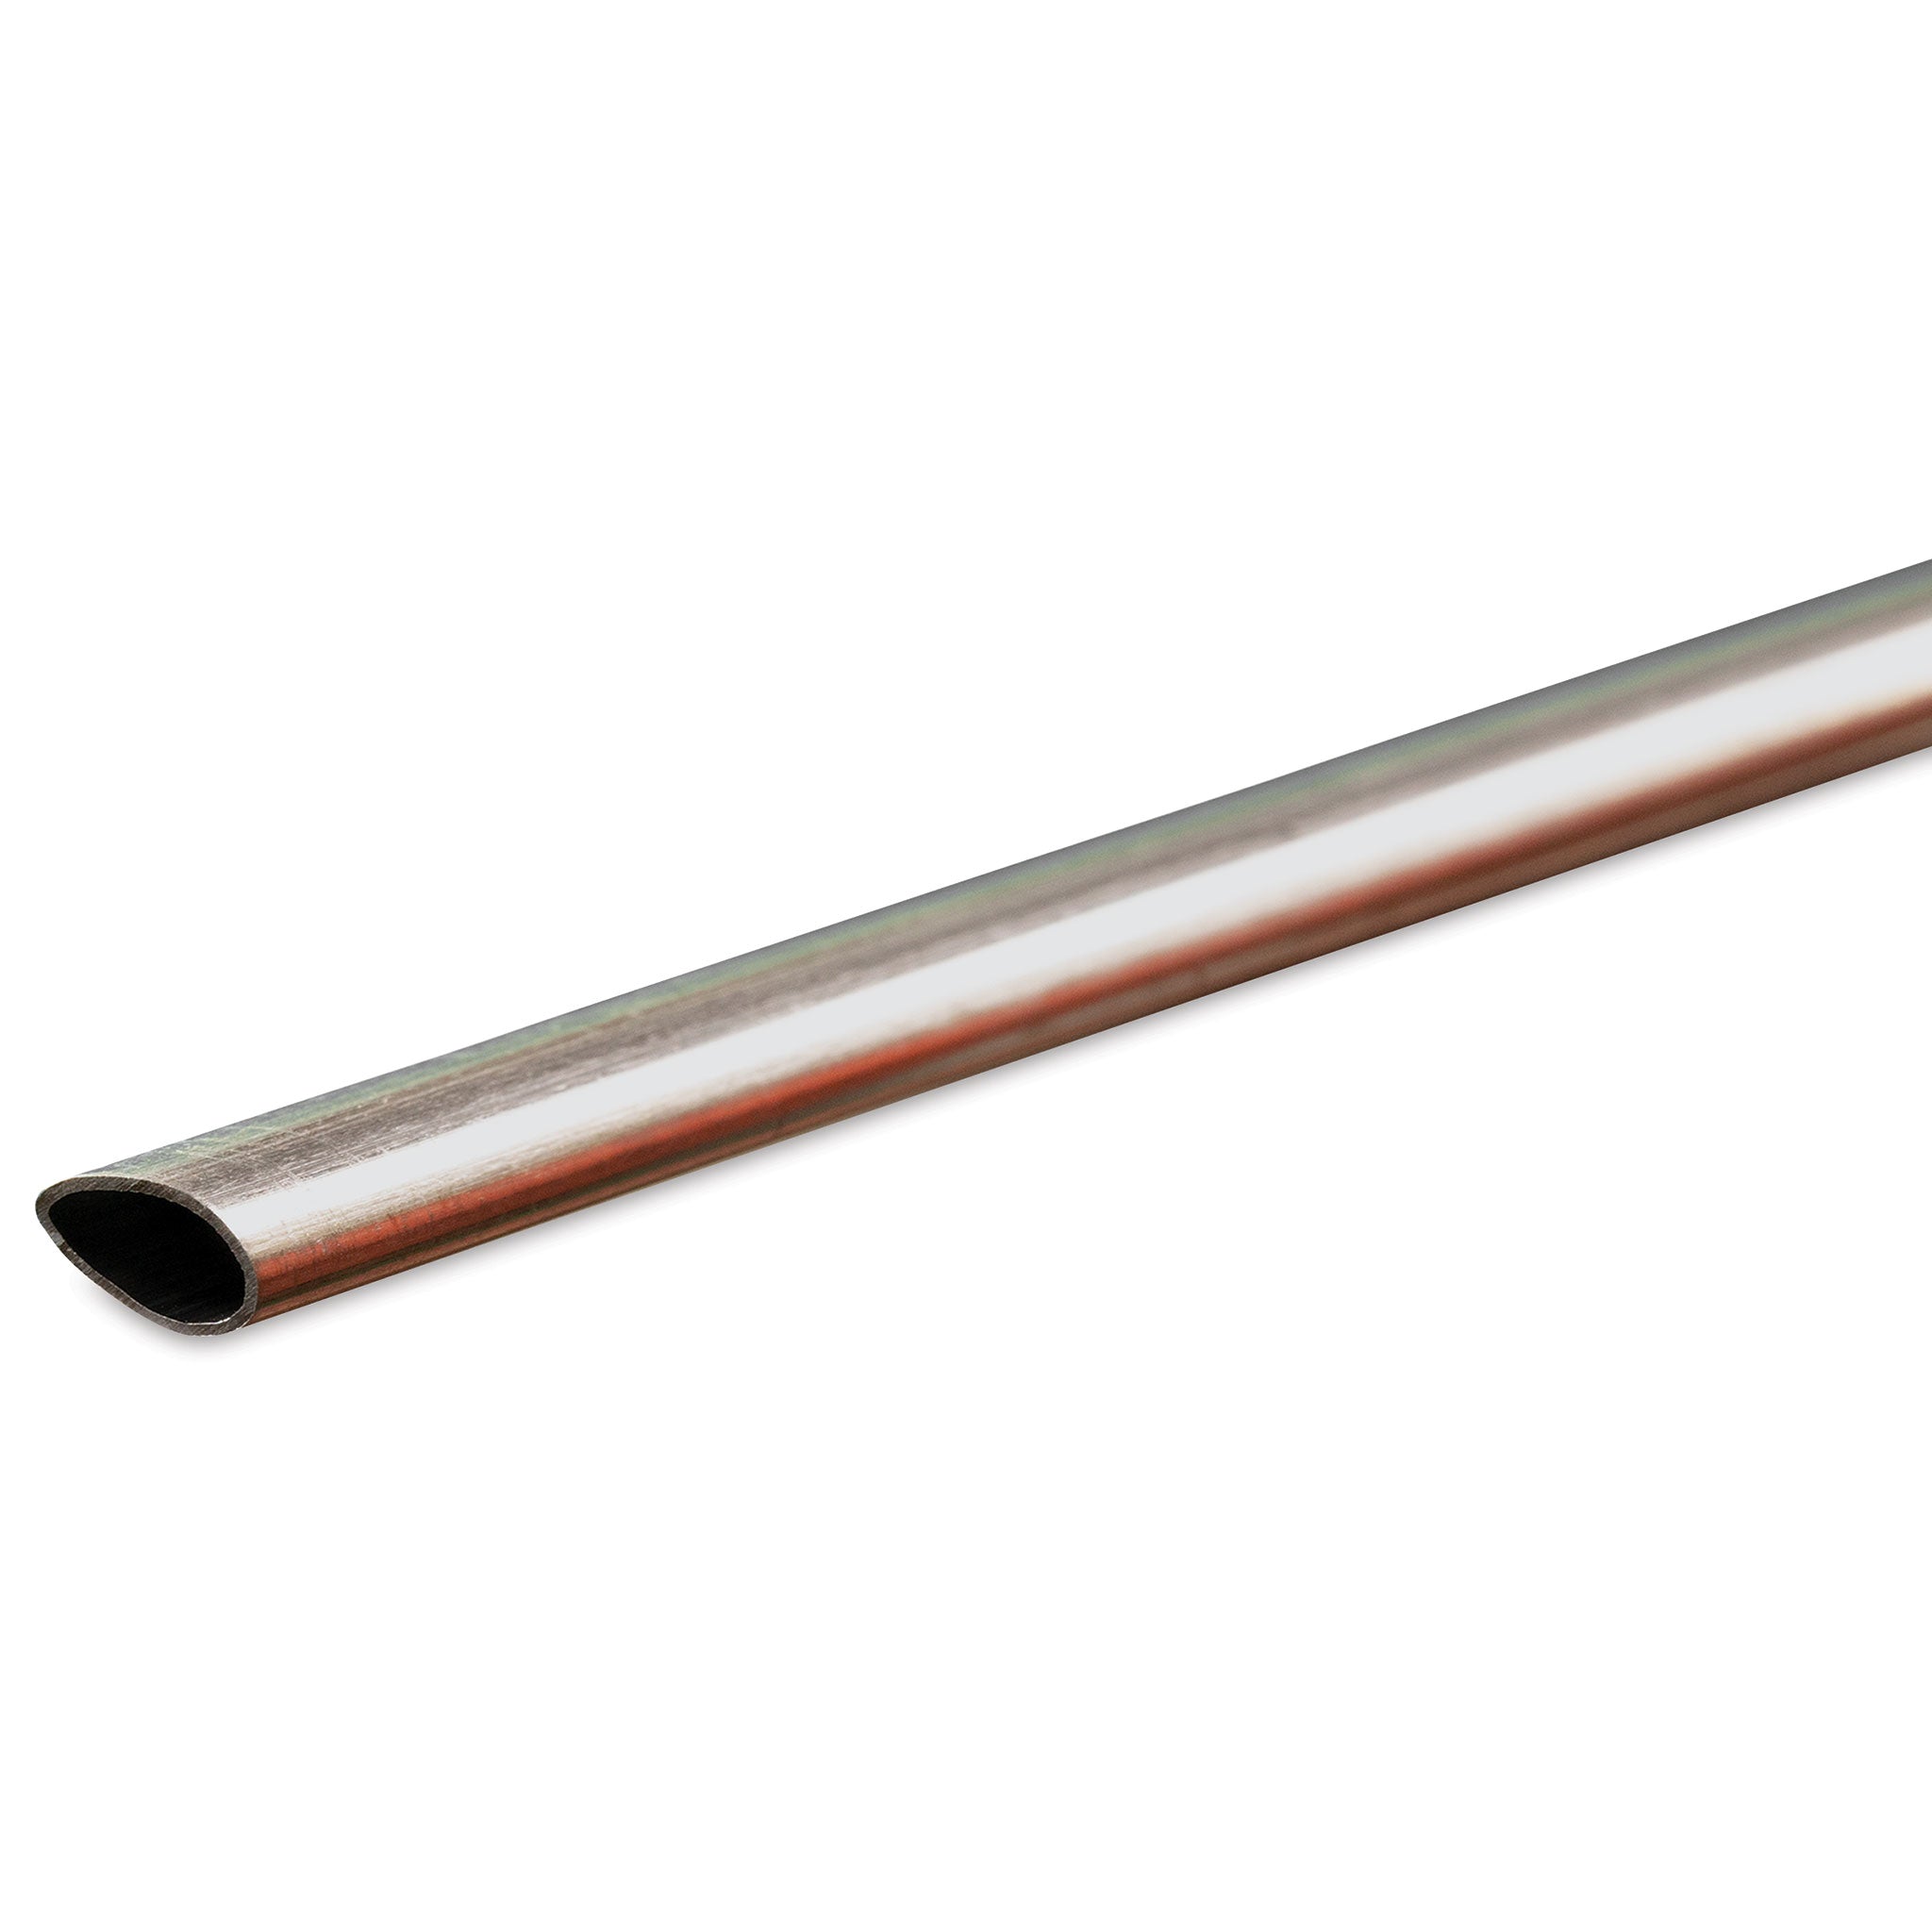 K&S Metals 1103 Aluminum Streamline Tube 1/2" OD x .016" Wall x 35" Long (1 Piece)